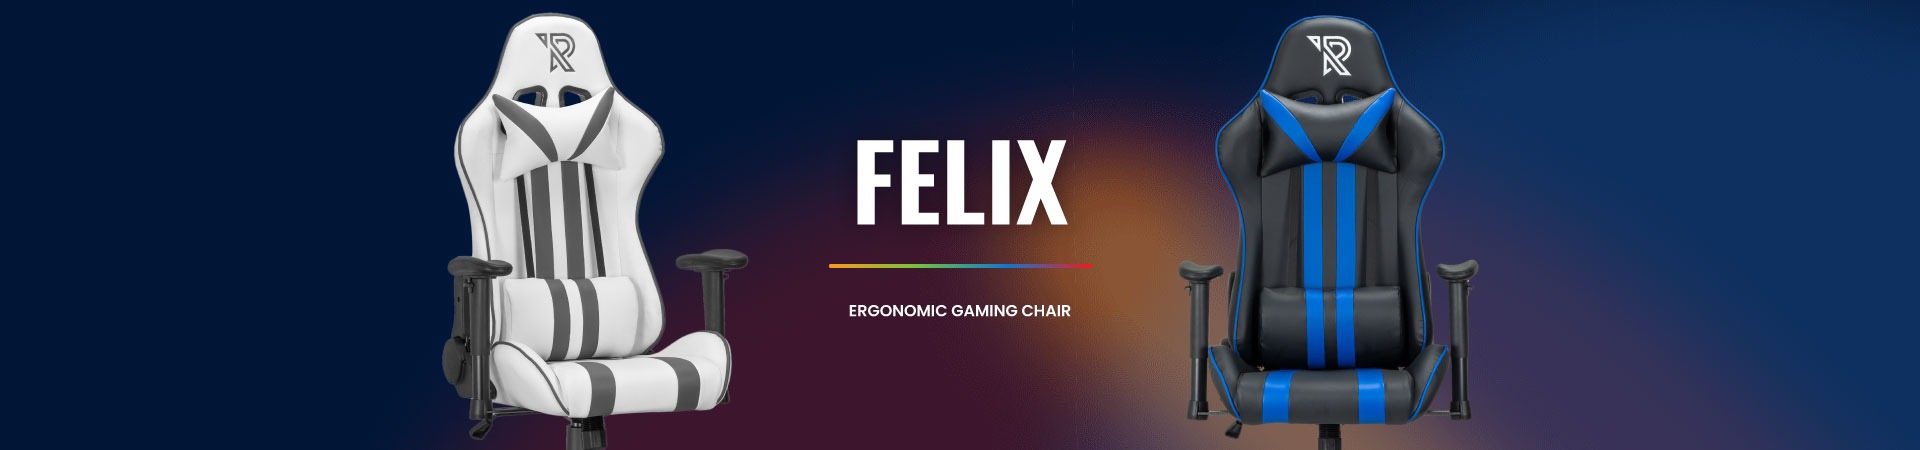 Ranqer Felix gaming chair